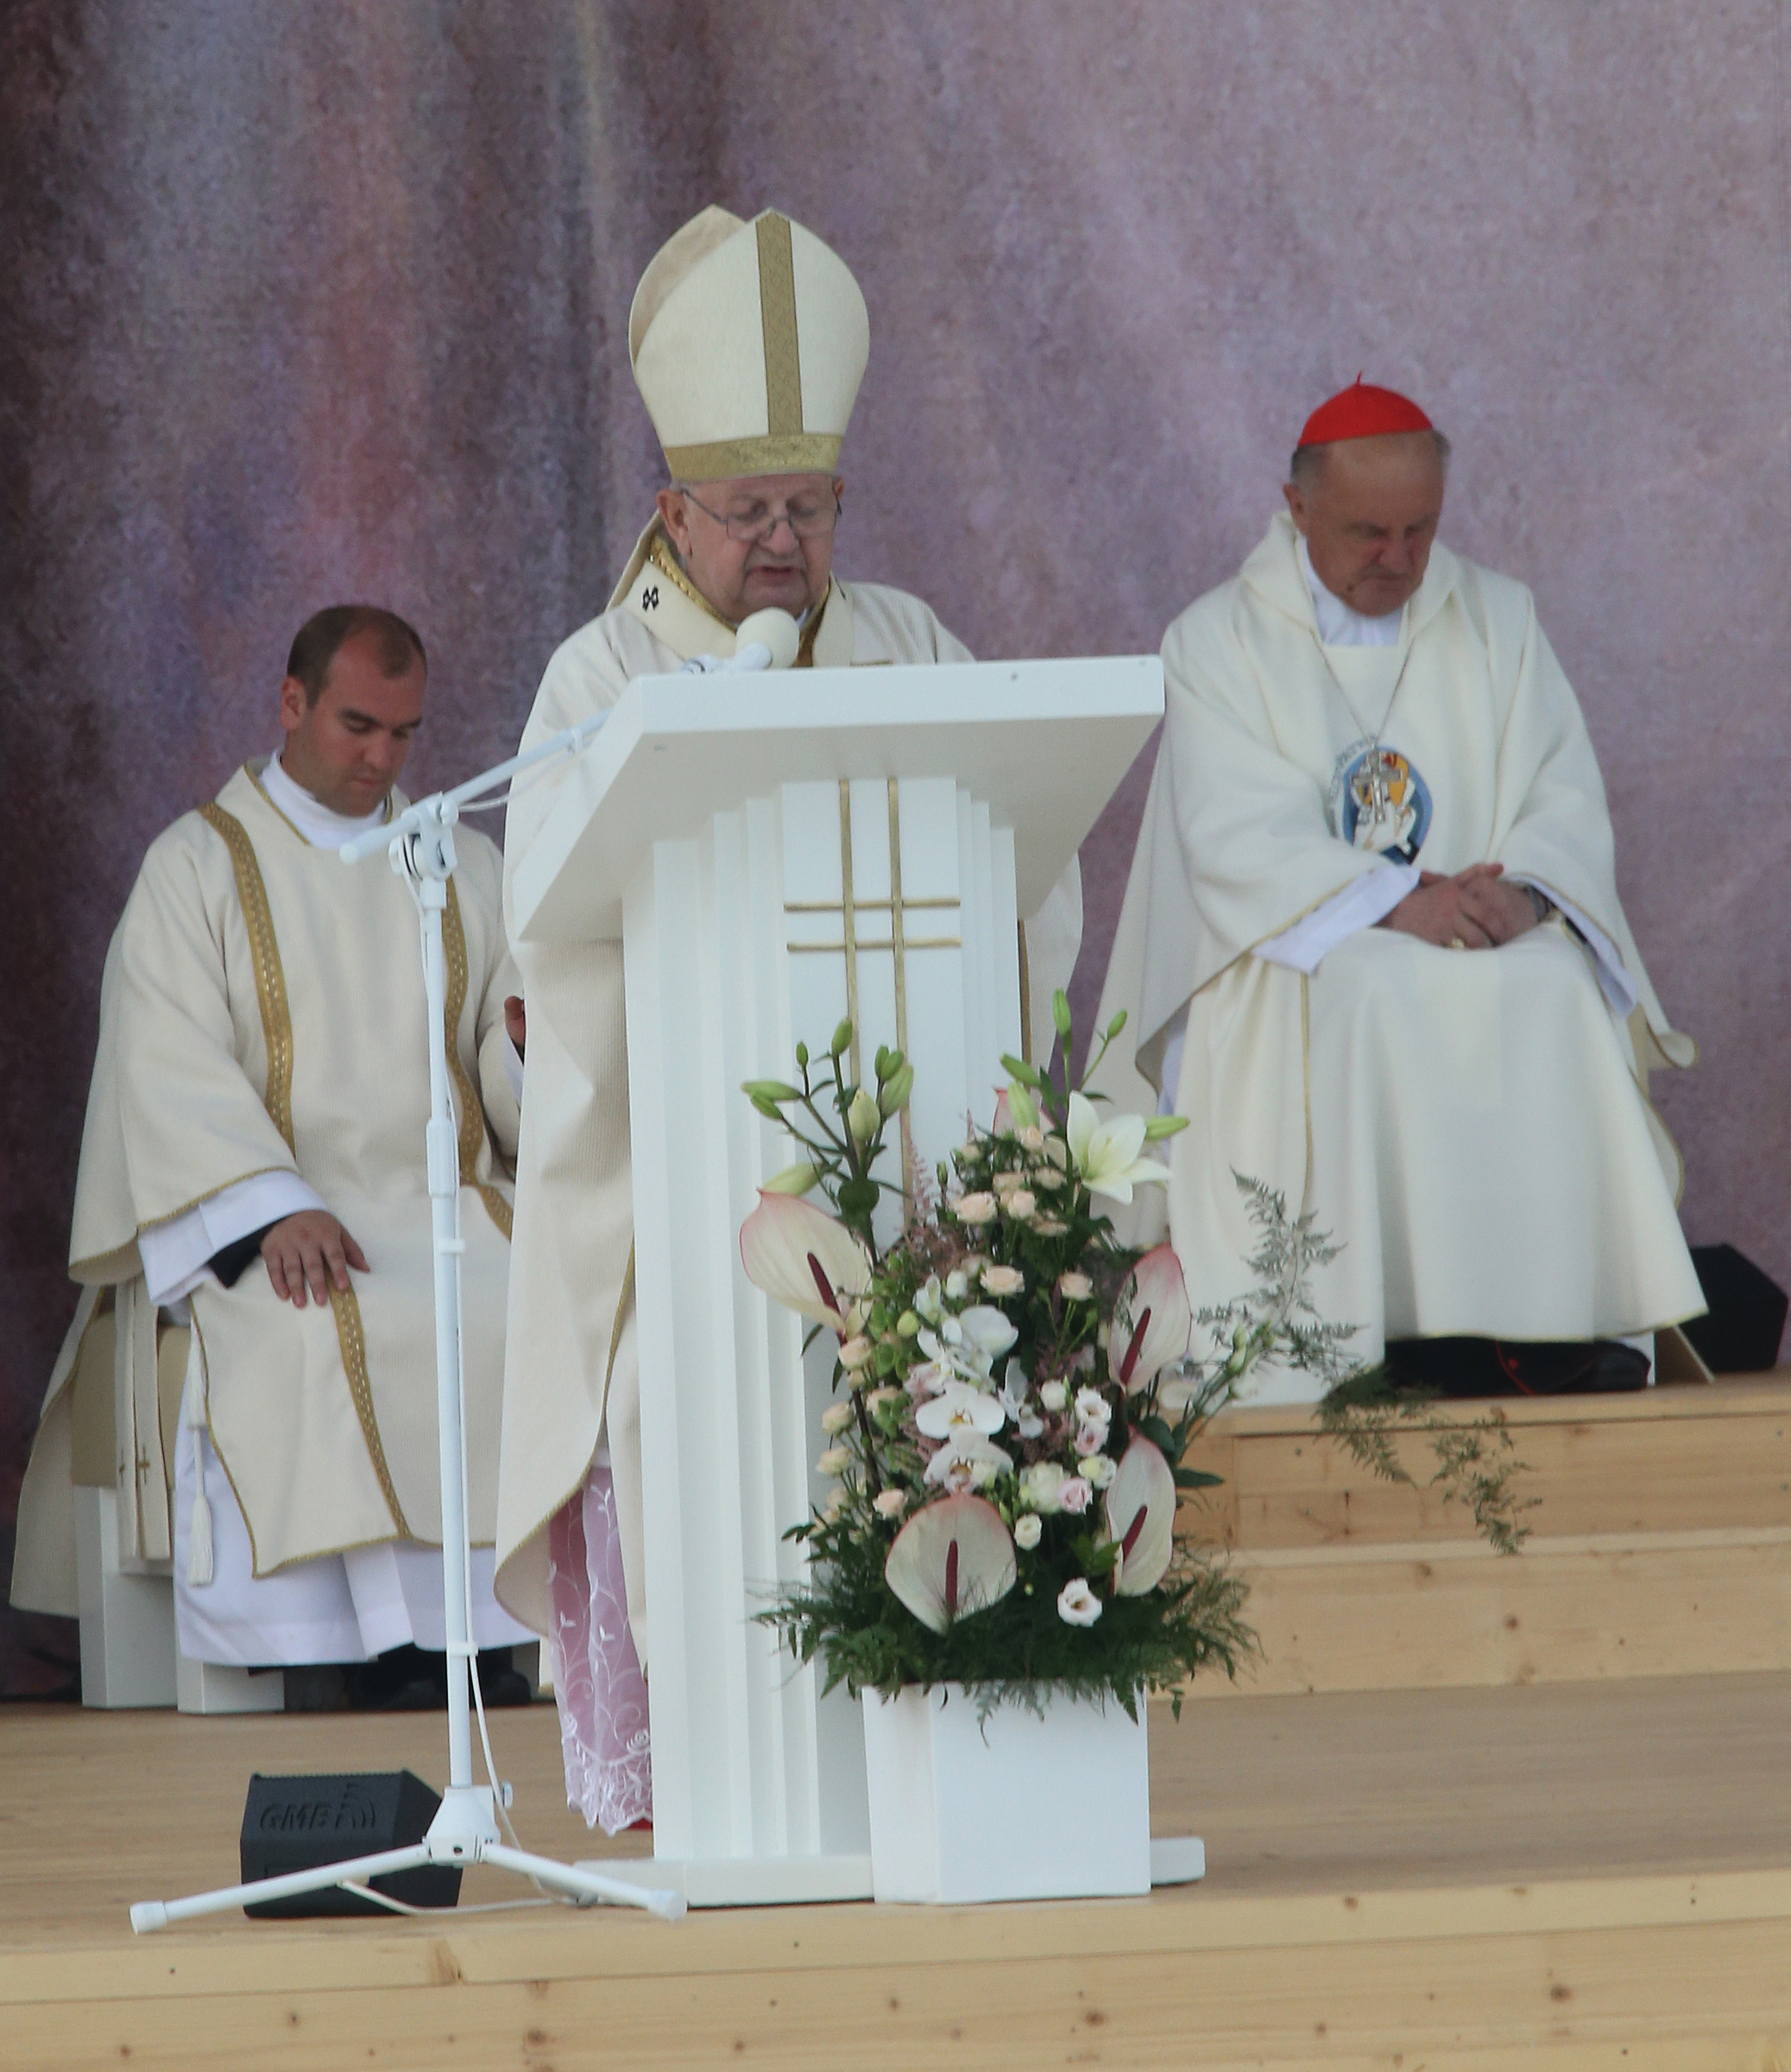 Cardinal Stanislaw Dziwisz of Krakow, Poland, celebrating the opening Mass for World Youth Day